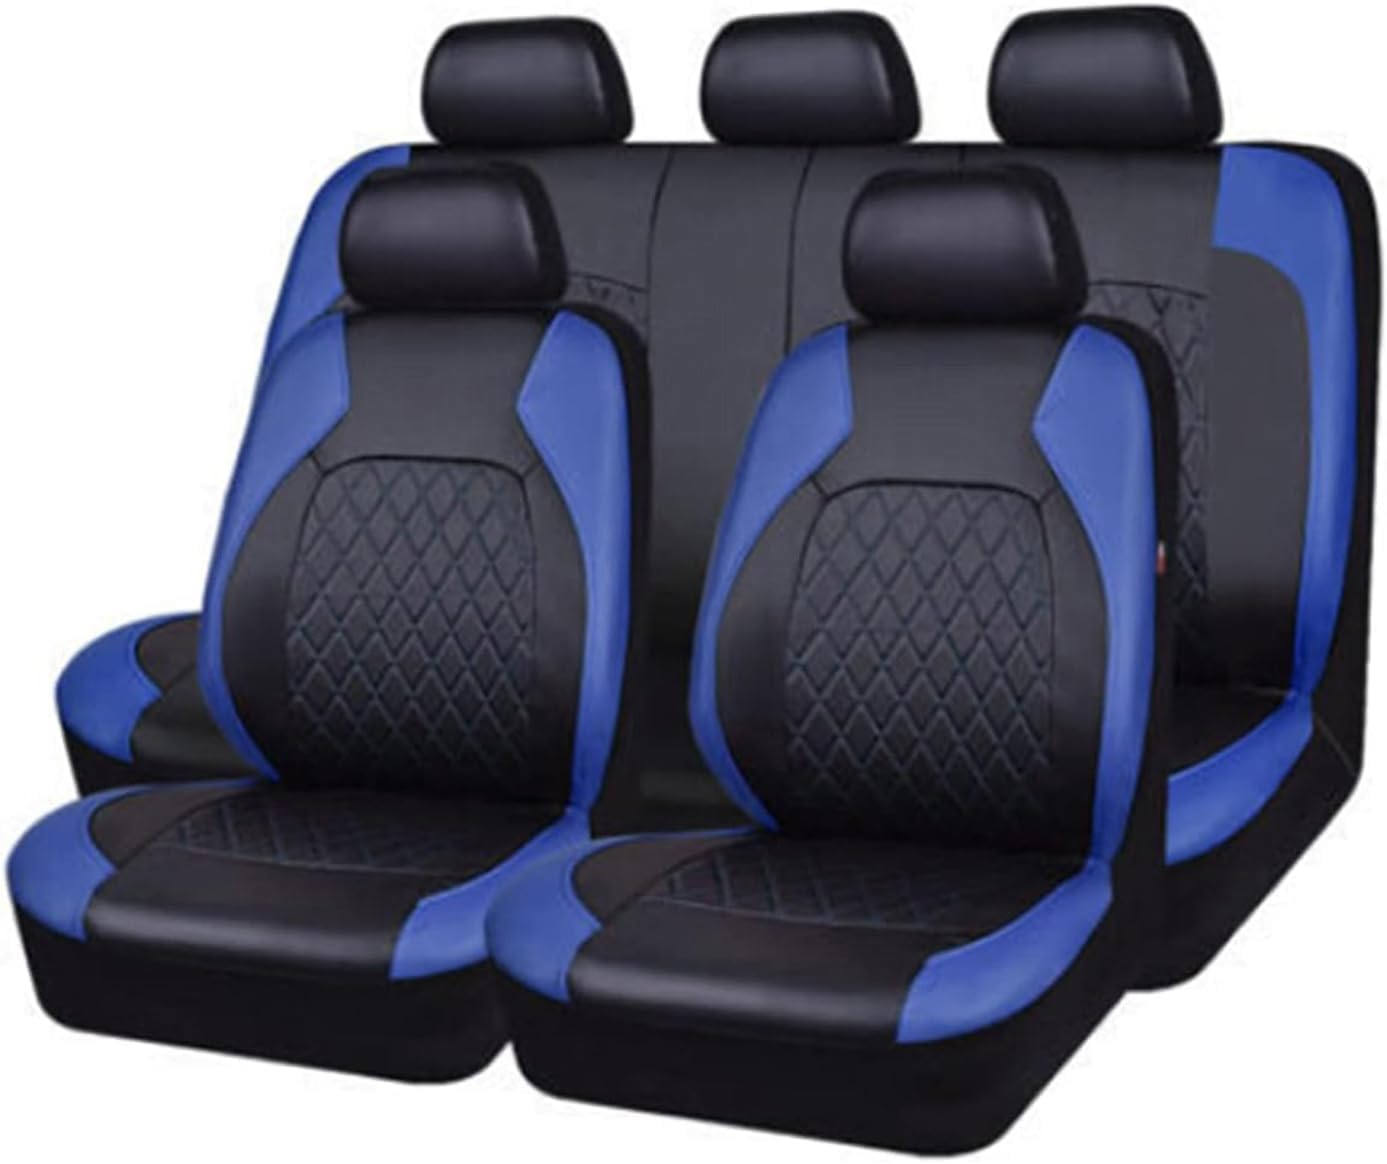 Auto Leder Sitzbezüge für BMW 1er 120d E87 130i E87 120i E87 118i E87 116i E87 116d E87, 9 Stück Allwetter rutschfest Wasserdicht Atmungsaktiv Schonbezug Set Sitzkissenschutz,C/Blue von SARCX